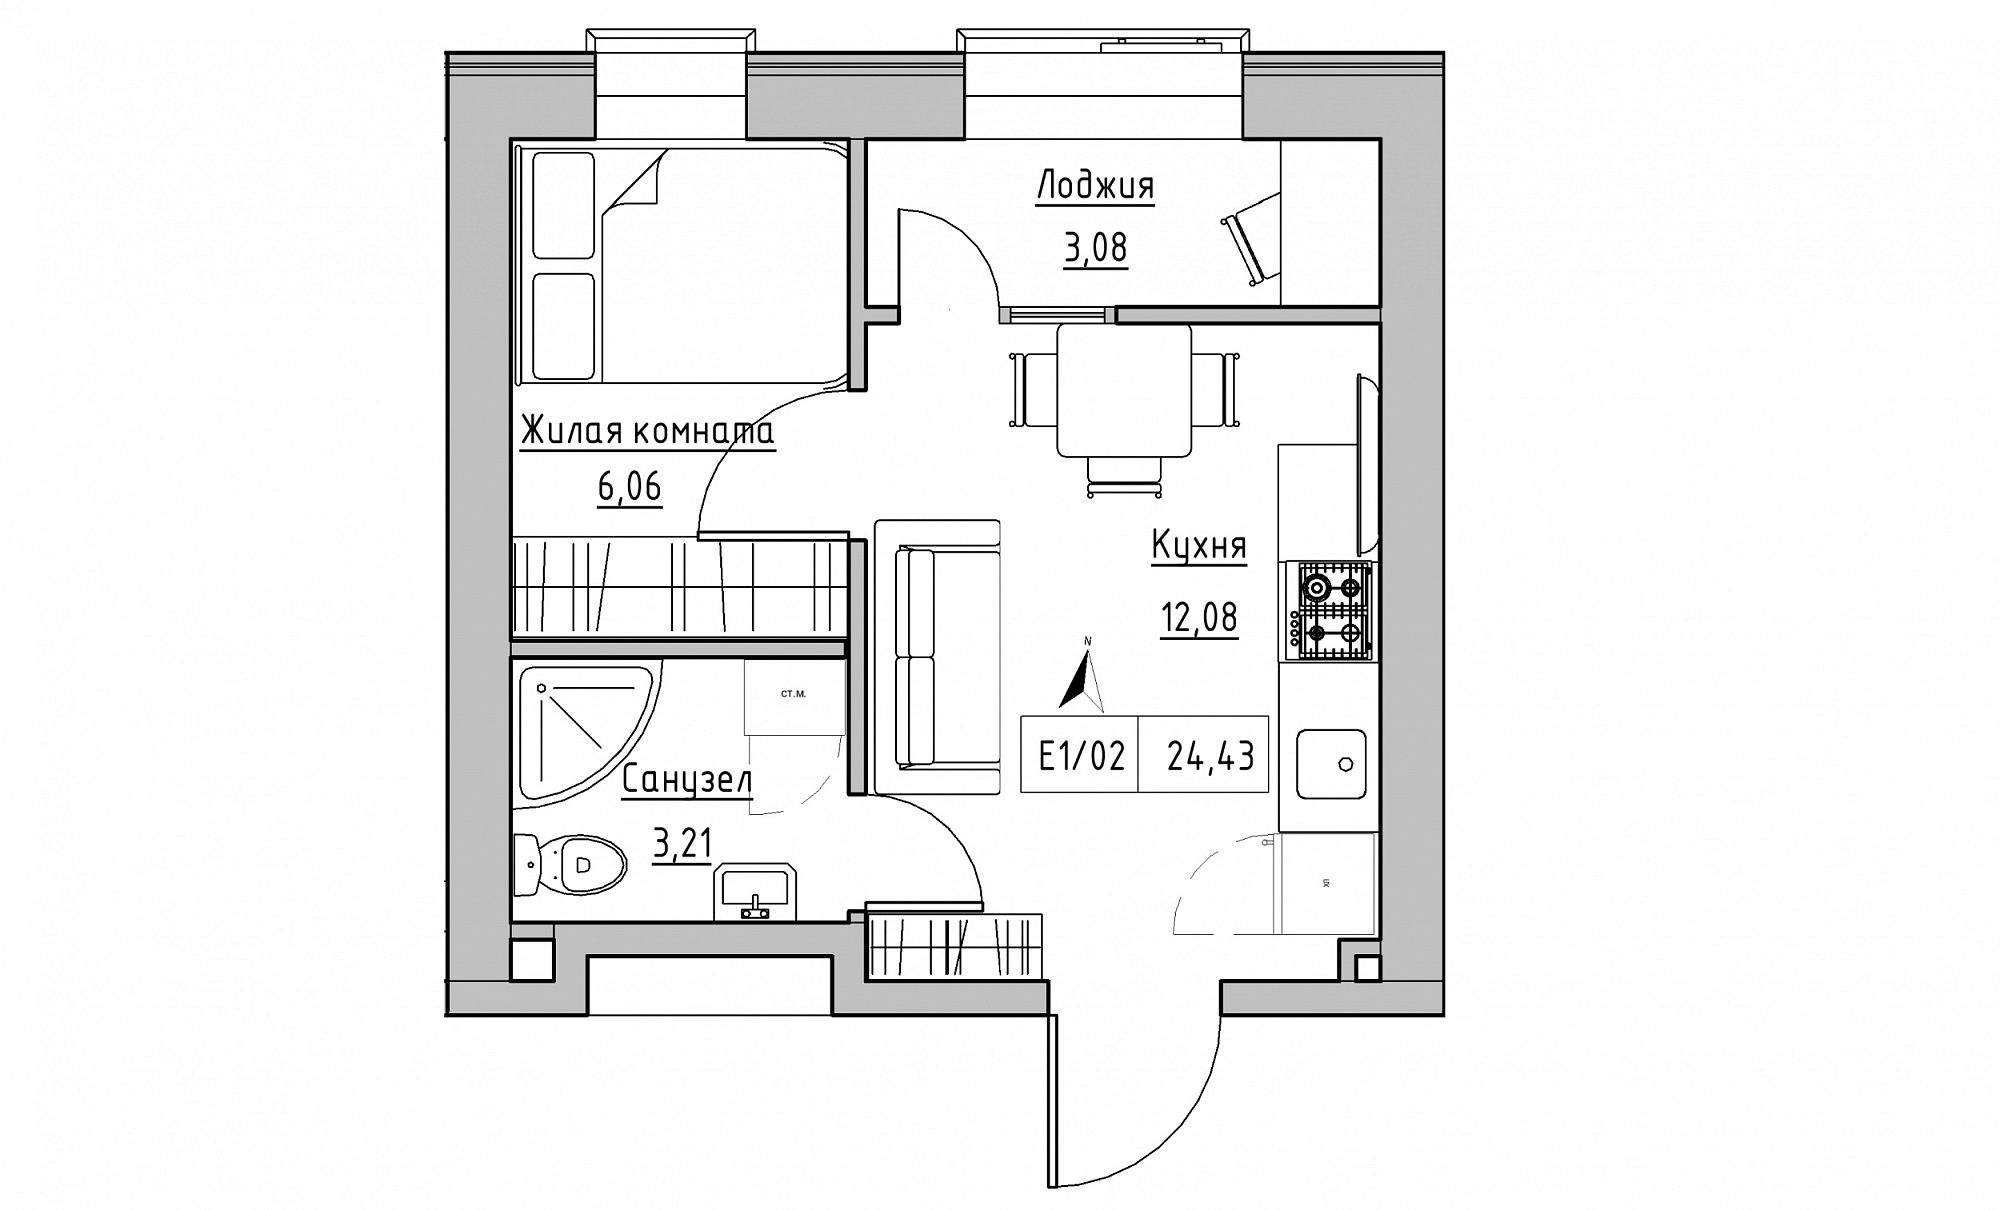 Planning 1-rm flats area 24.43m2, KS-015-01/0014.